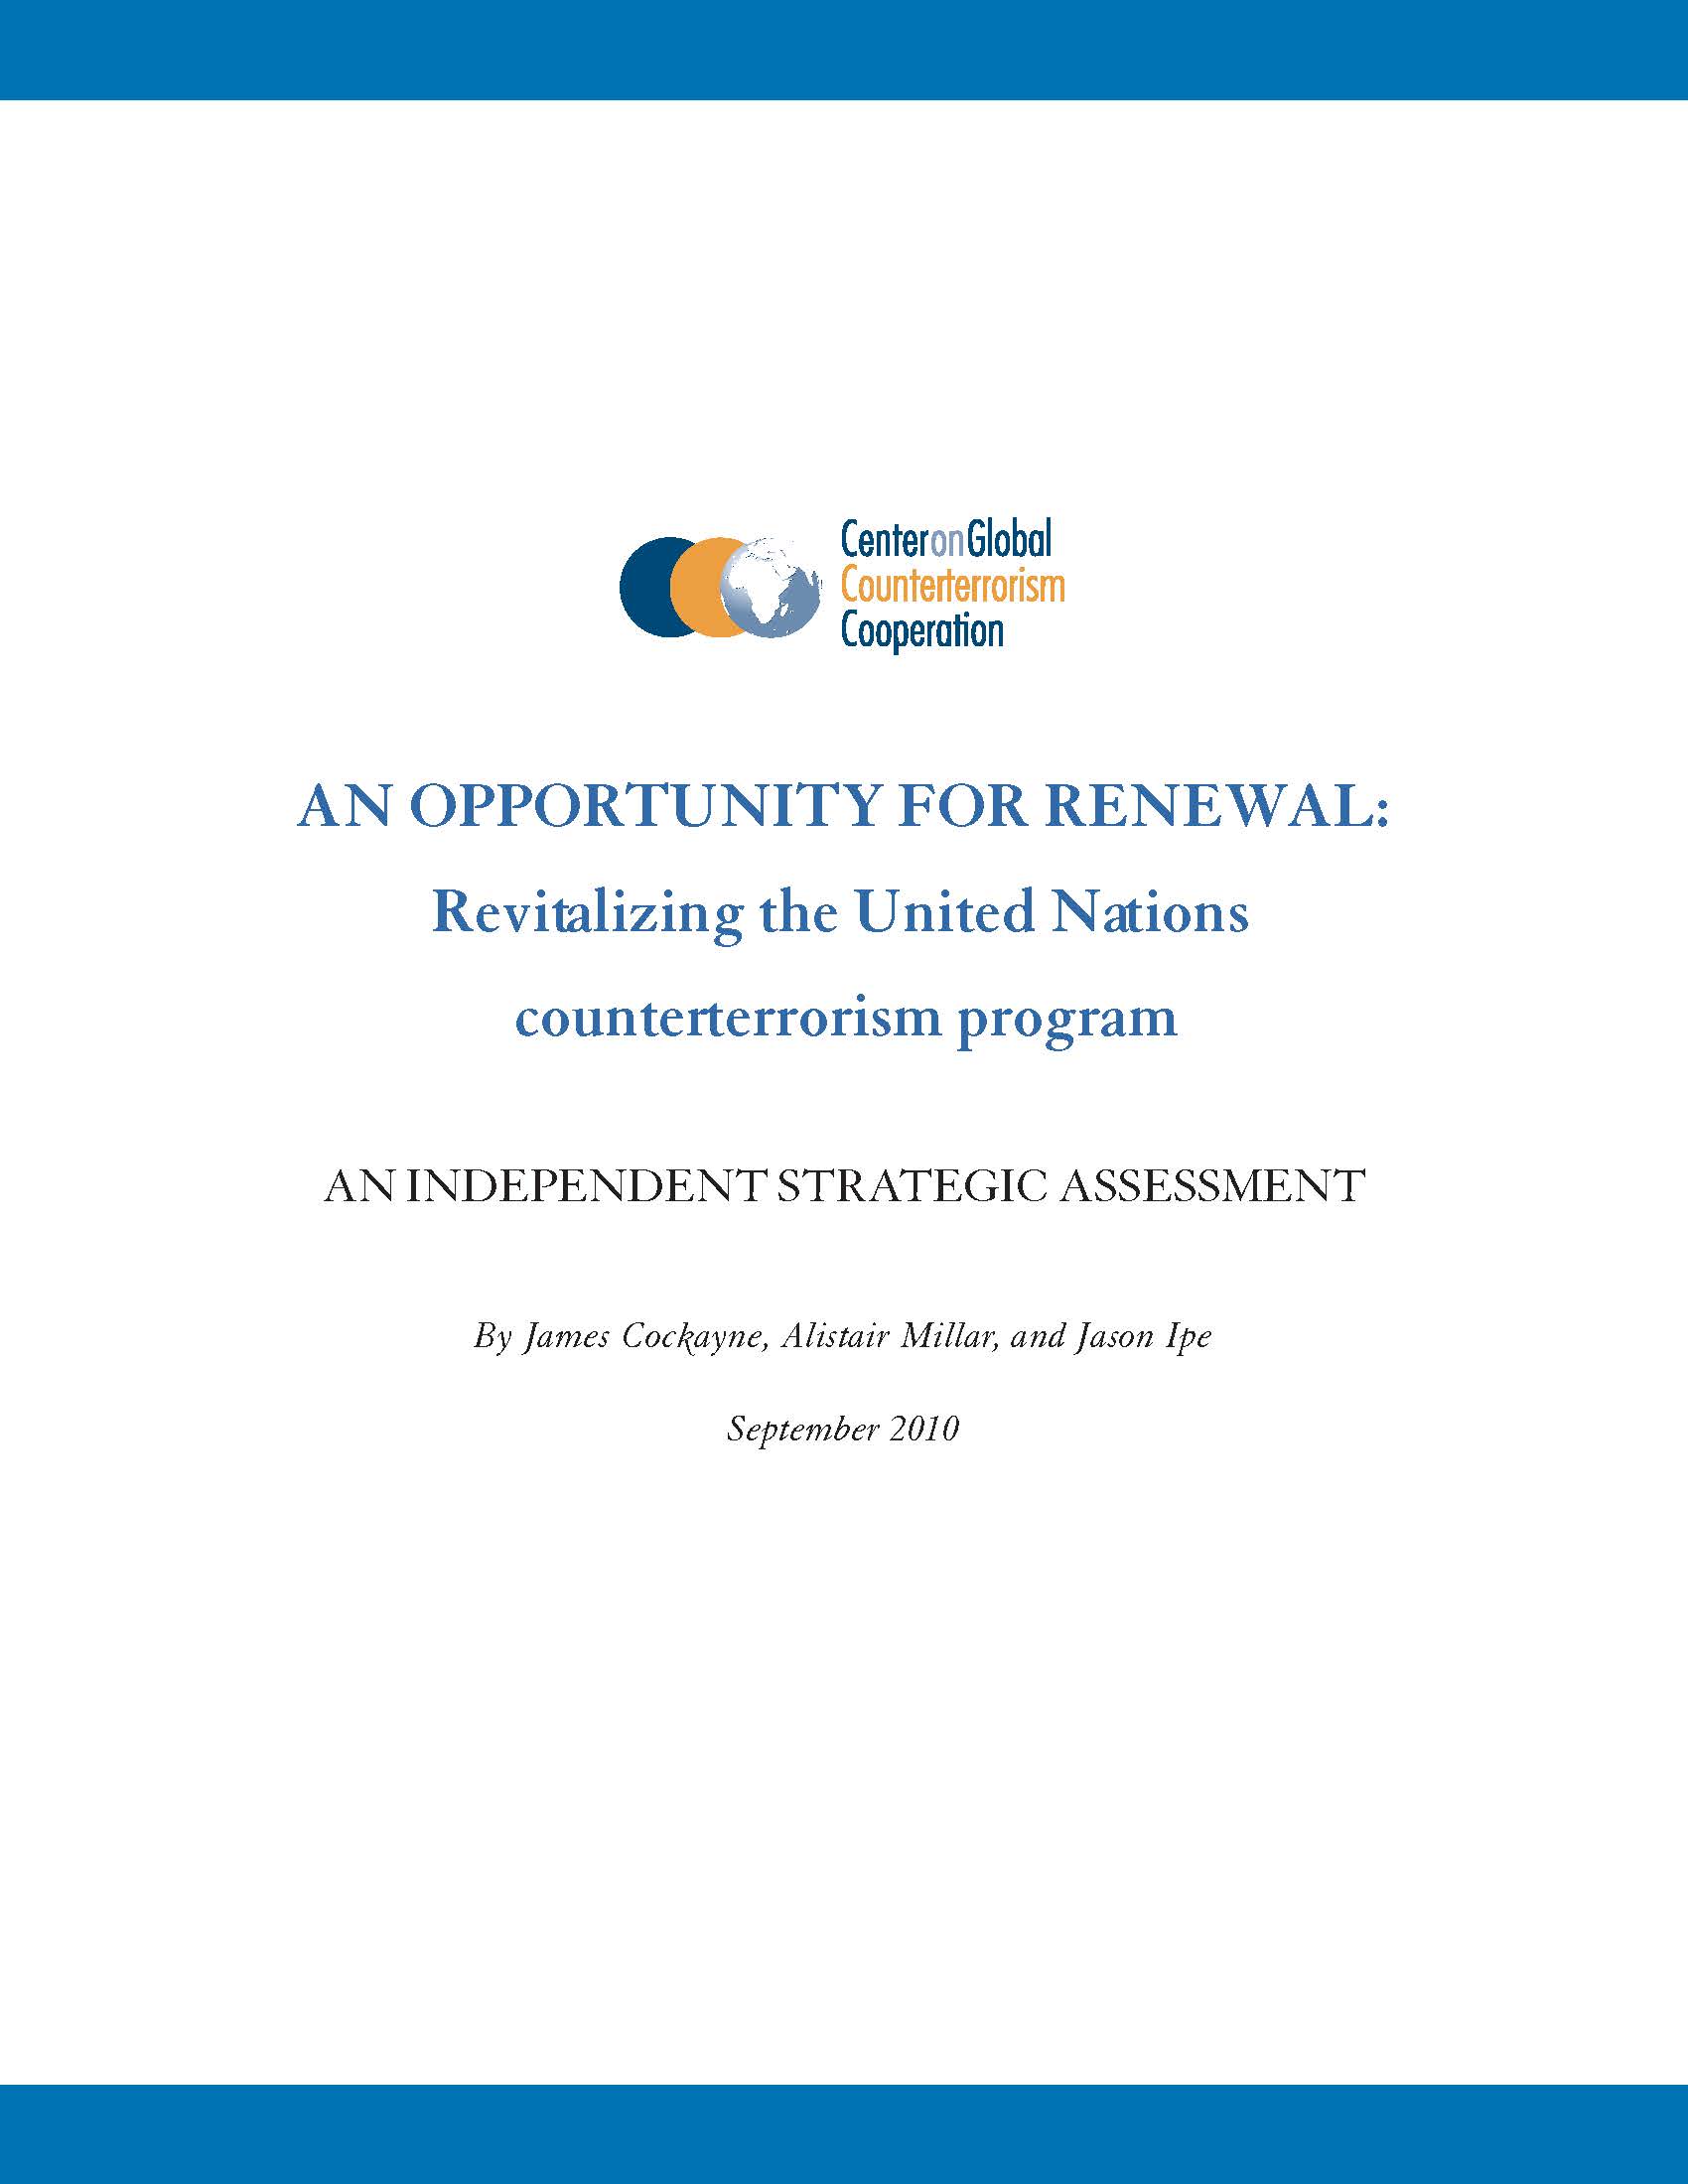 An Opportunity for Renewal: Revitalizing the United Nations Counterterrorism Program